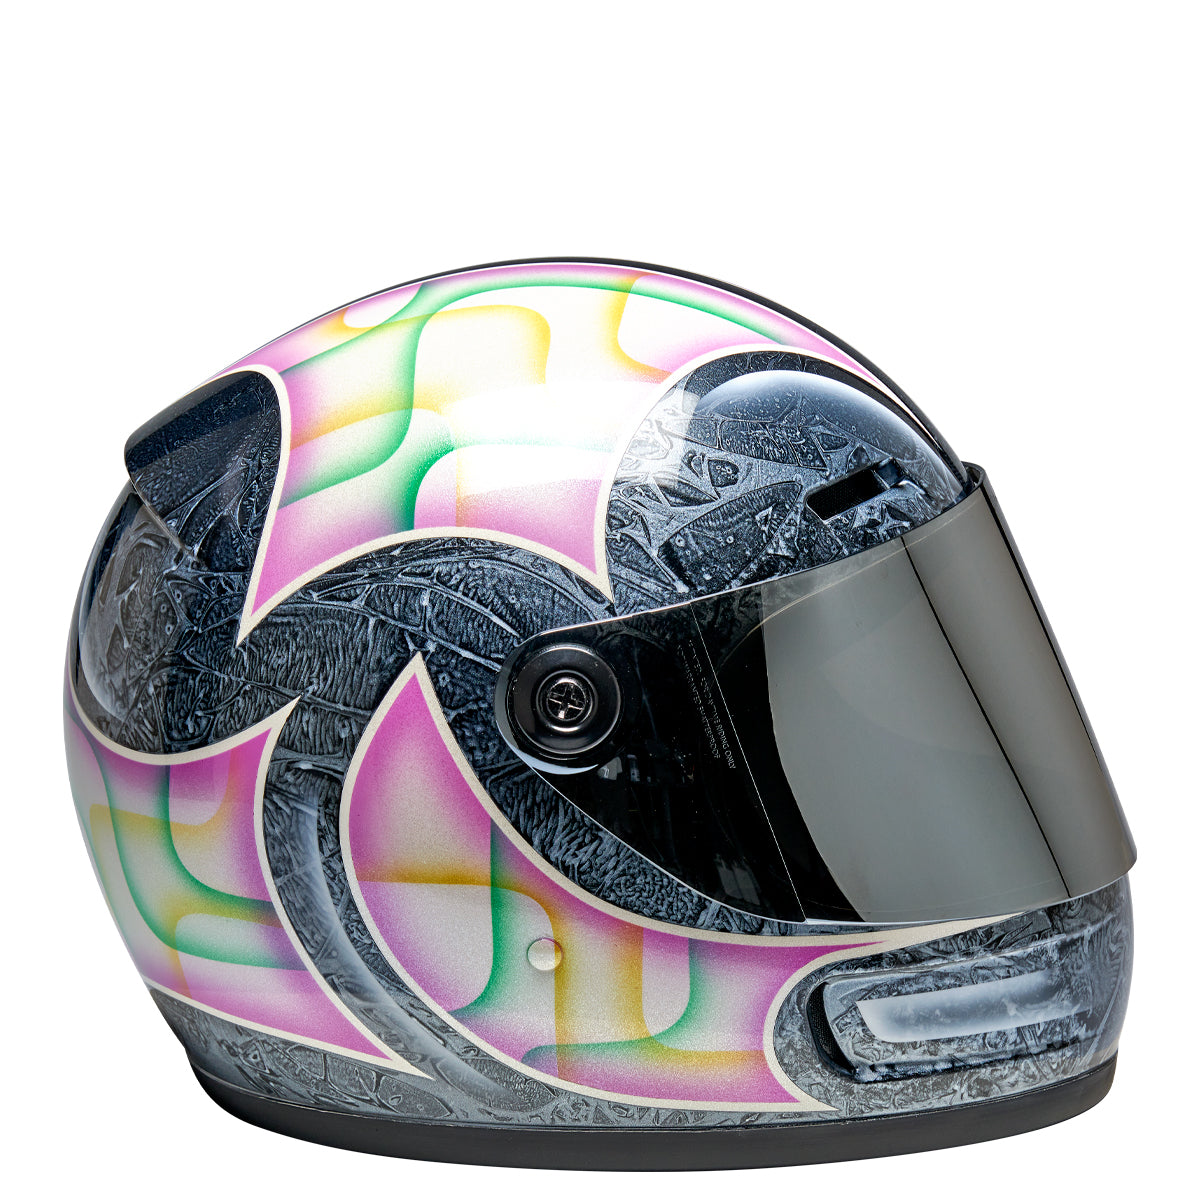 Custom Painted Gringo SV Helmet by Andrew Riffle